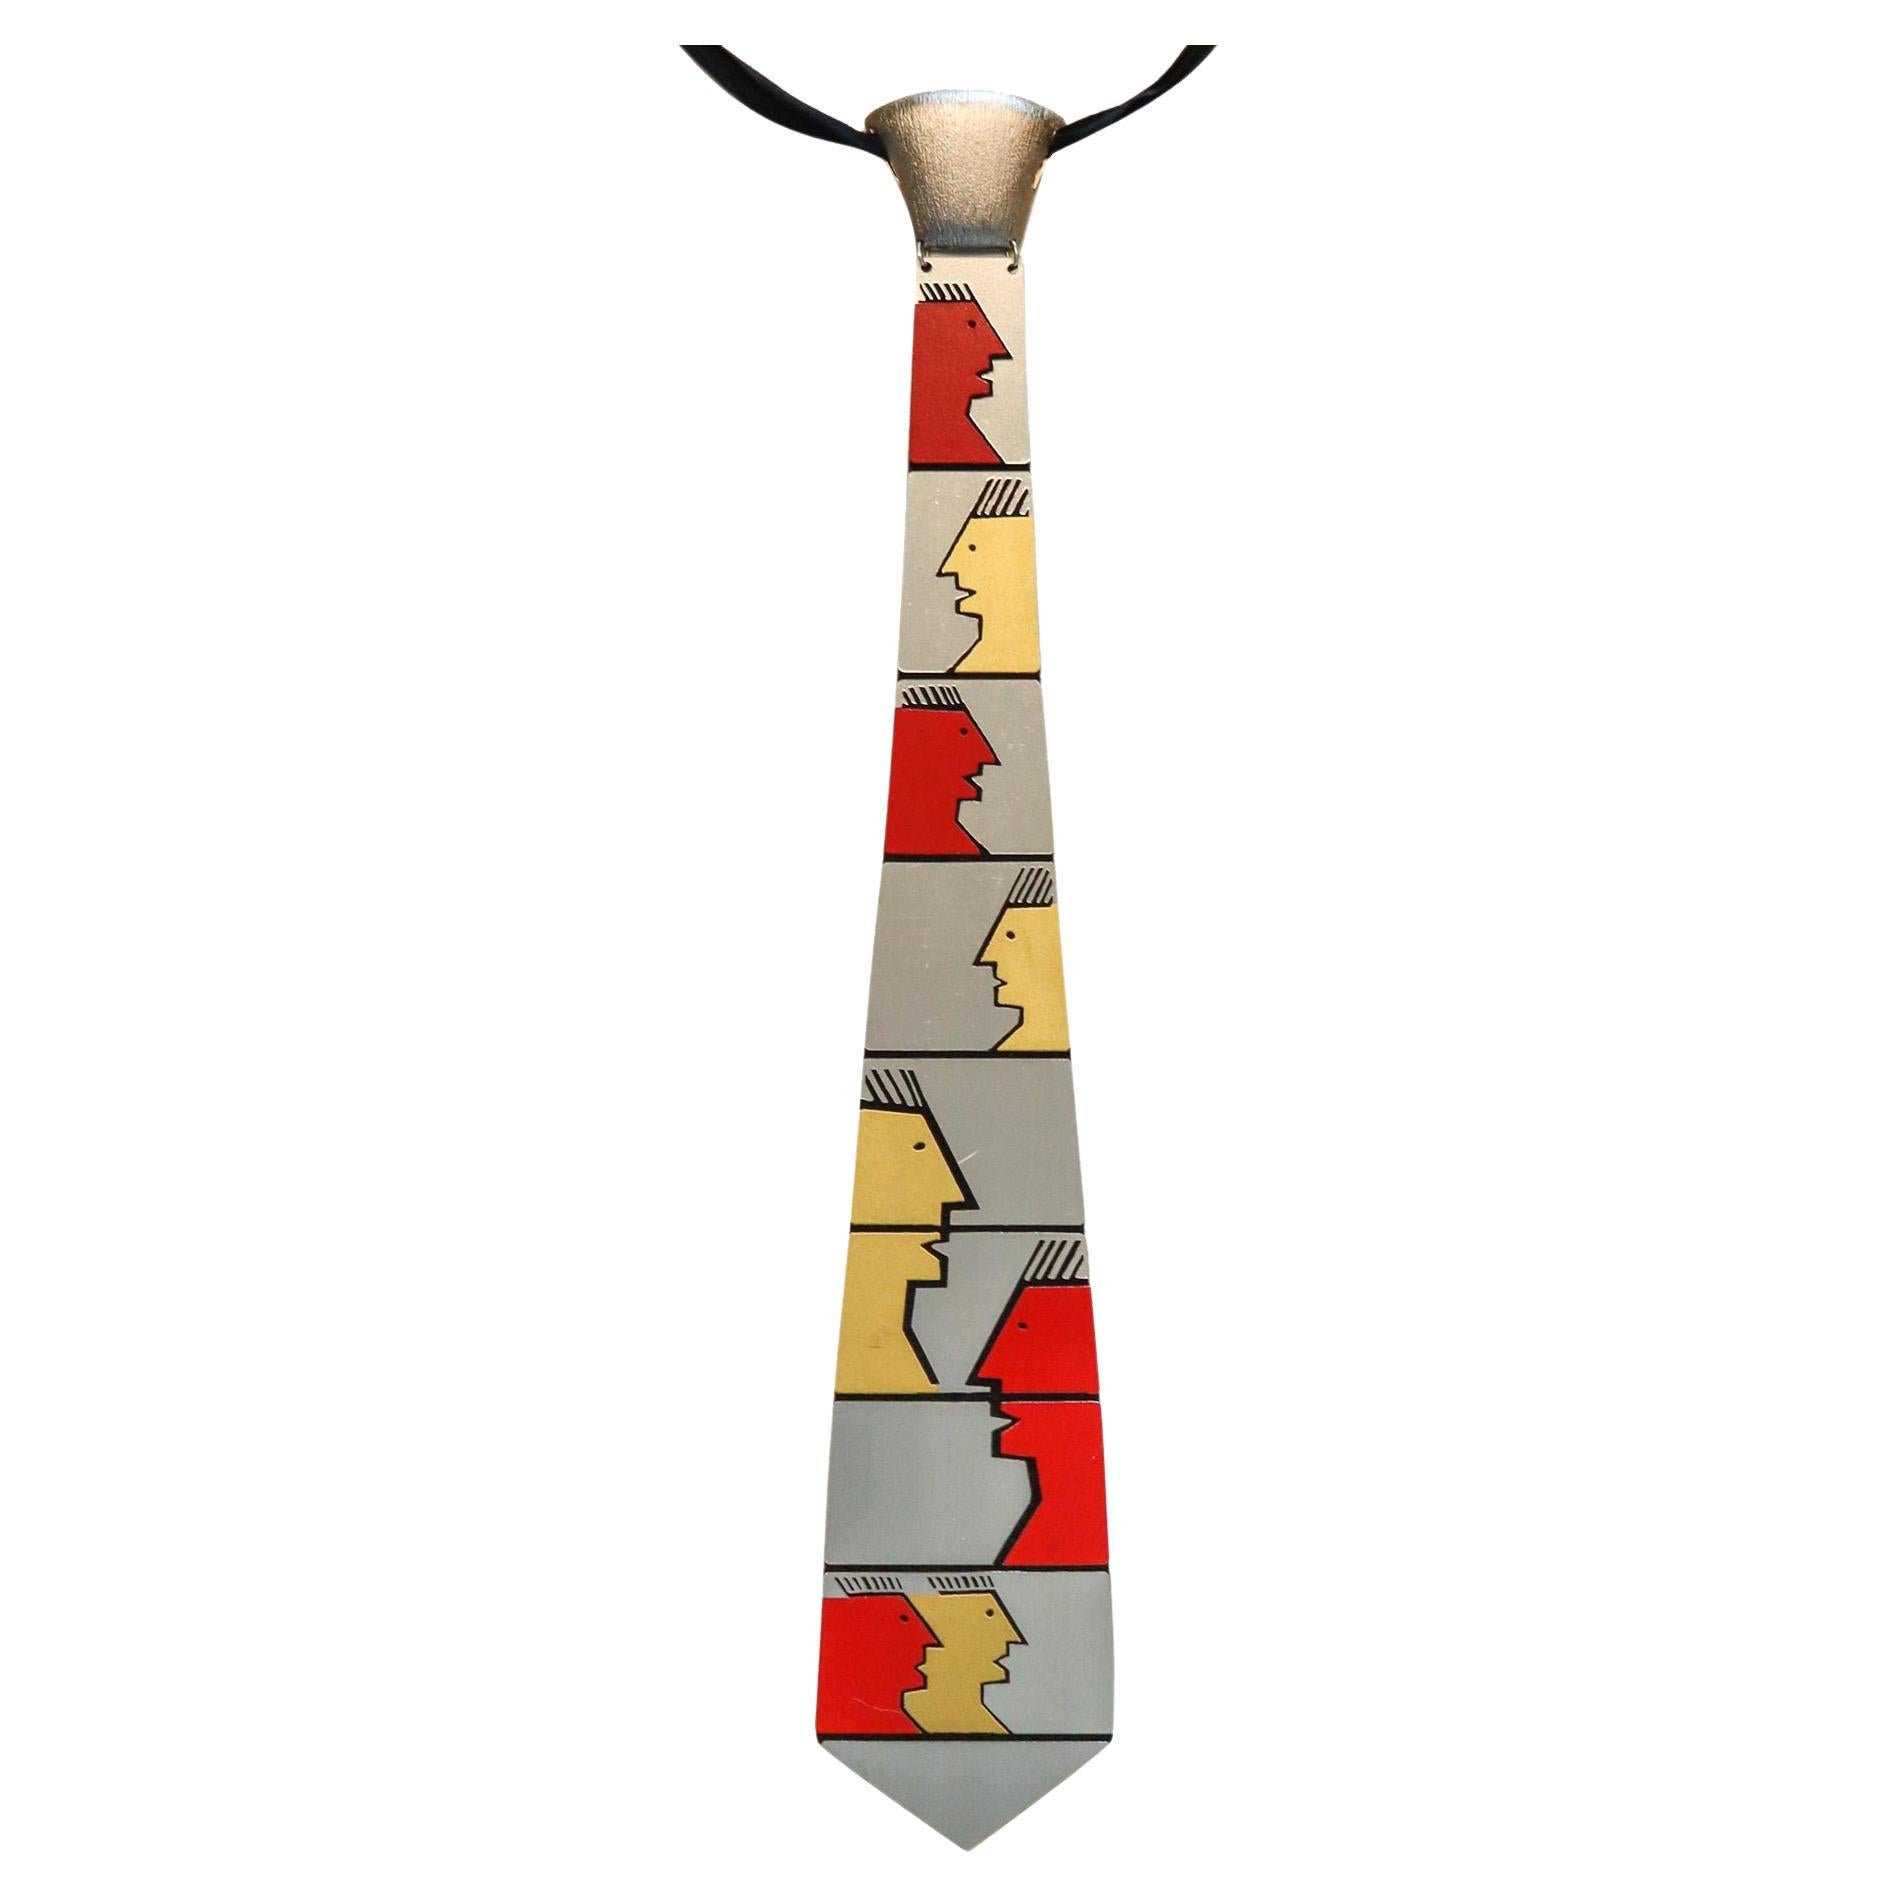 Pierre Cardin 1970 Paris Sculptural Artistic Metallic Tie in Enamel and Steel For Sale